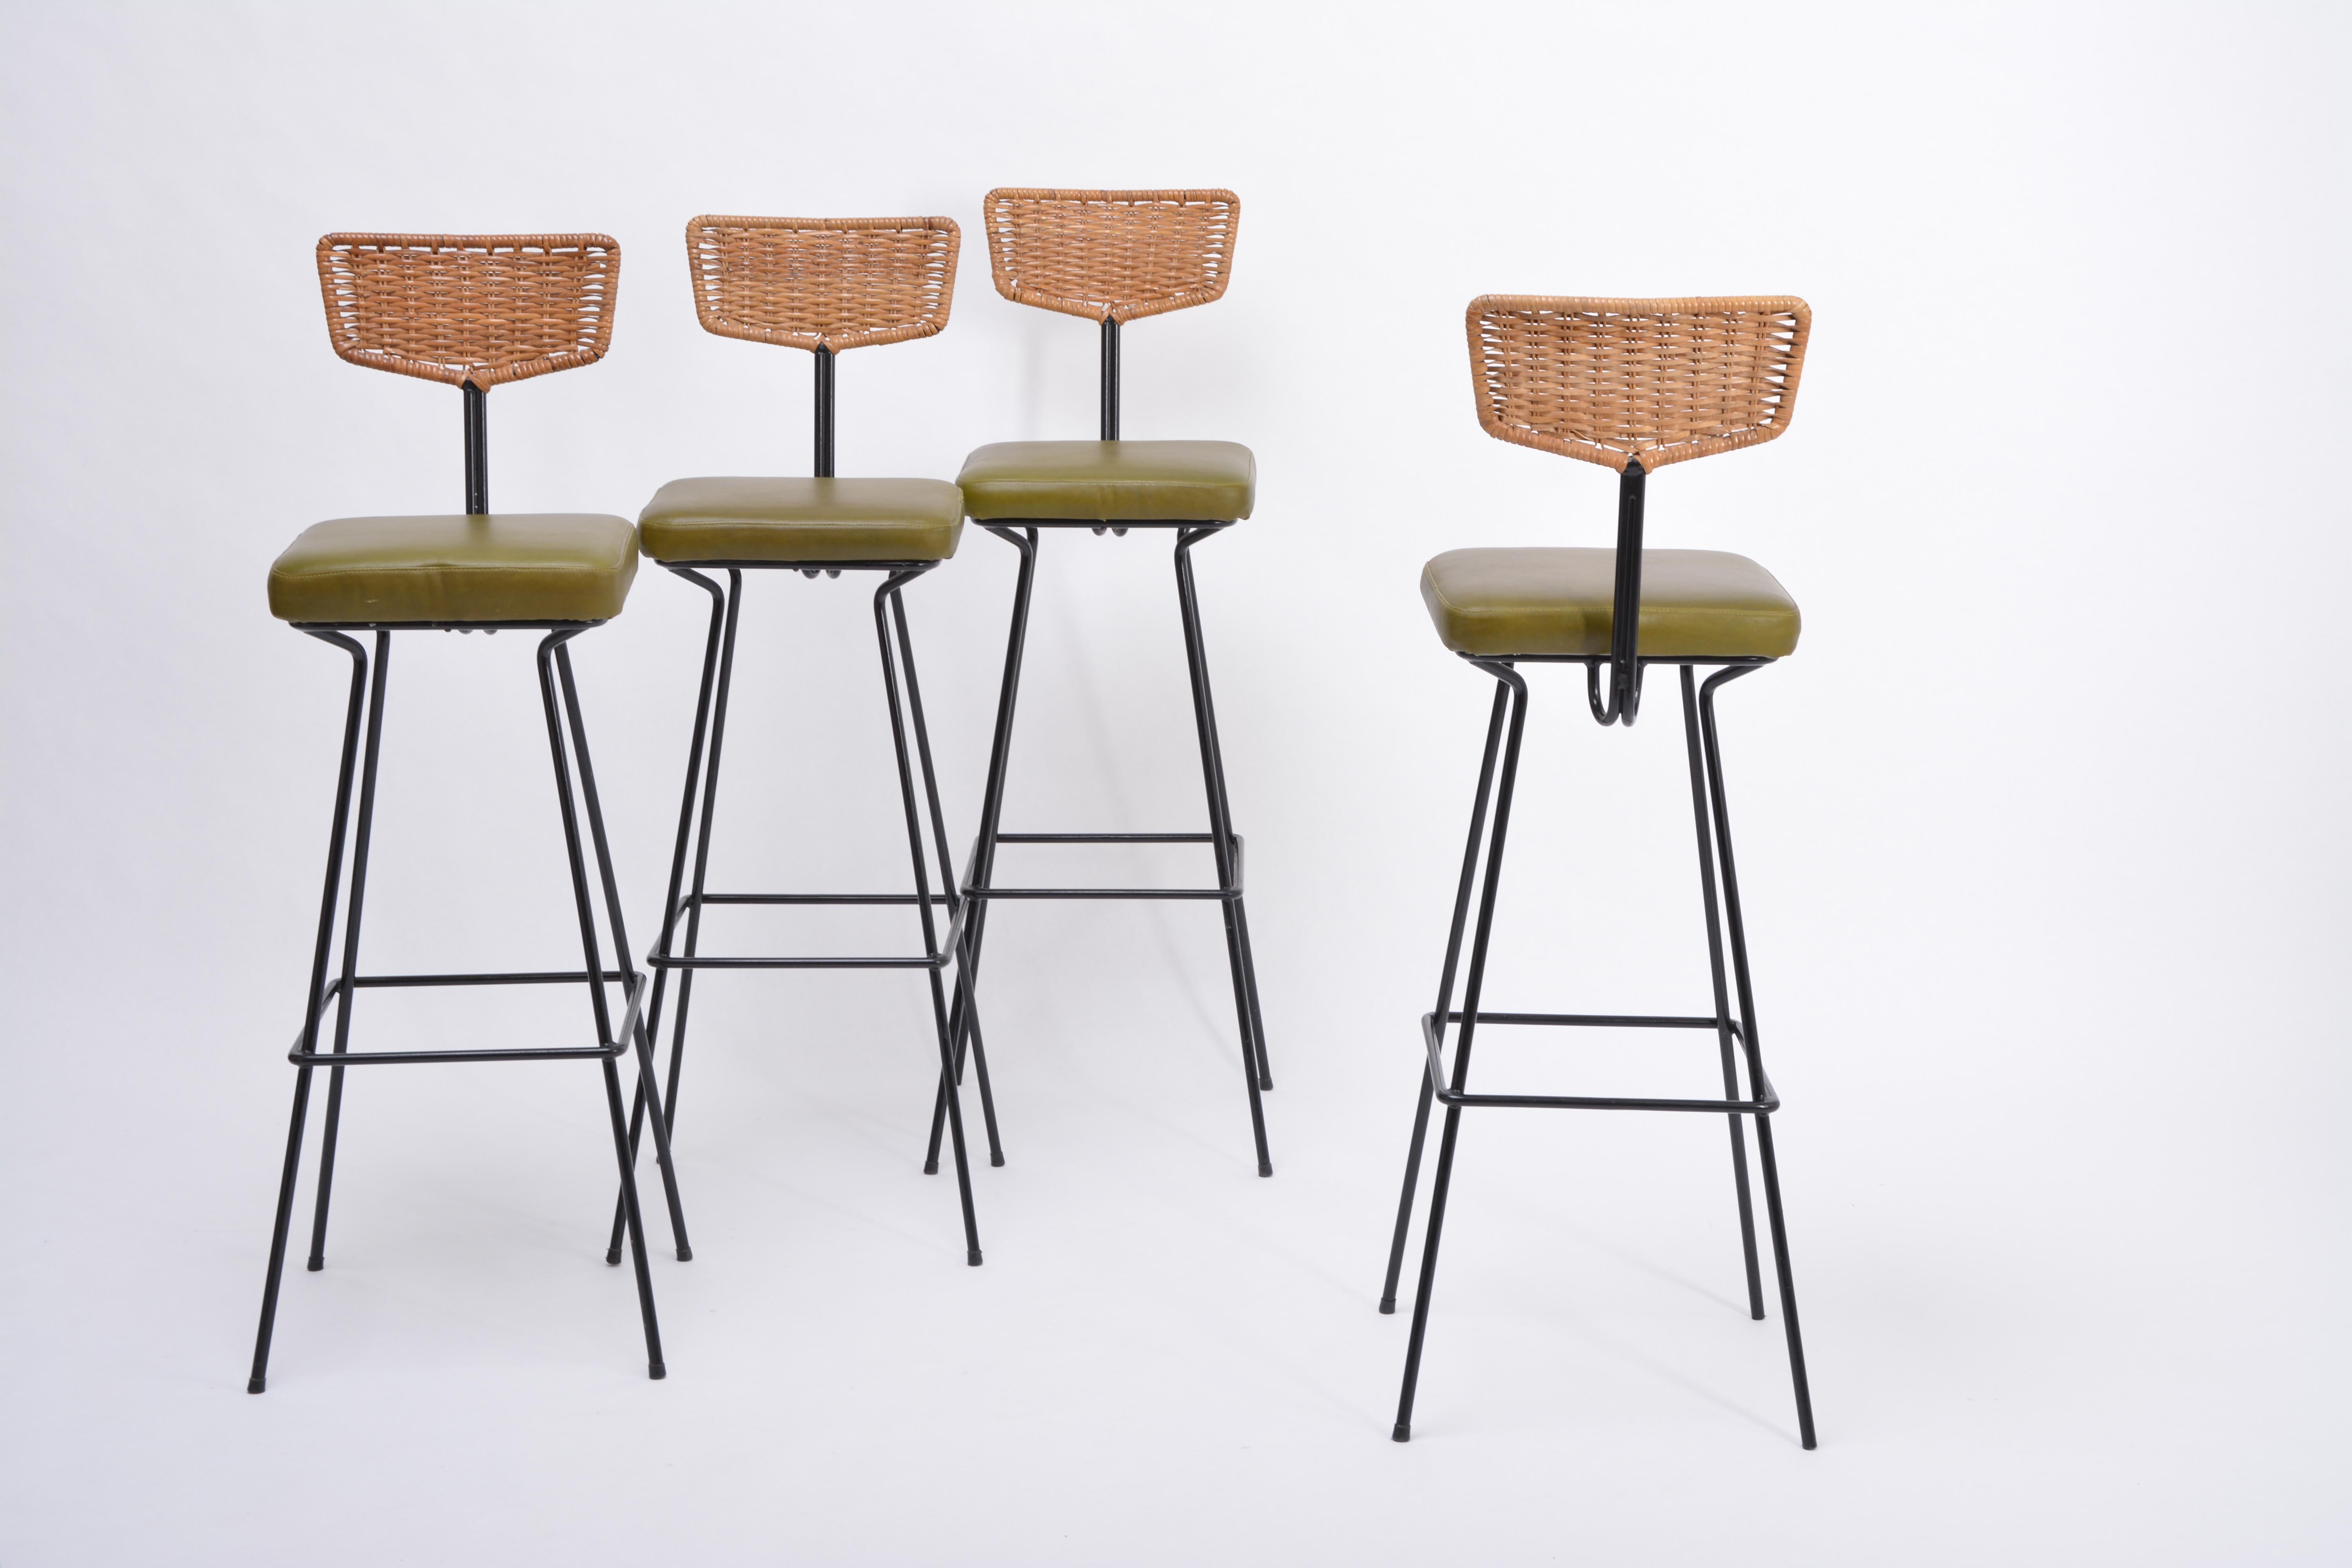 Metal Set of four Mid-Century Modern wicker bar stools by Herta Maria Witzemann